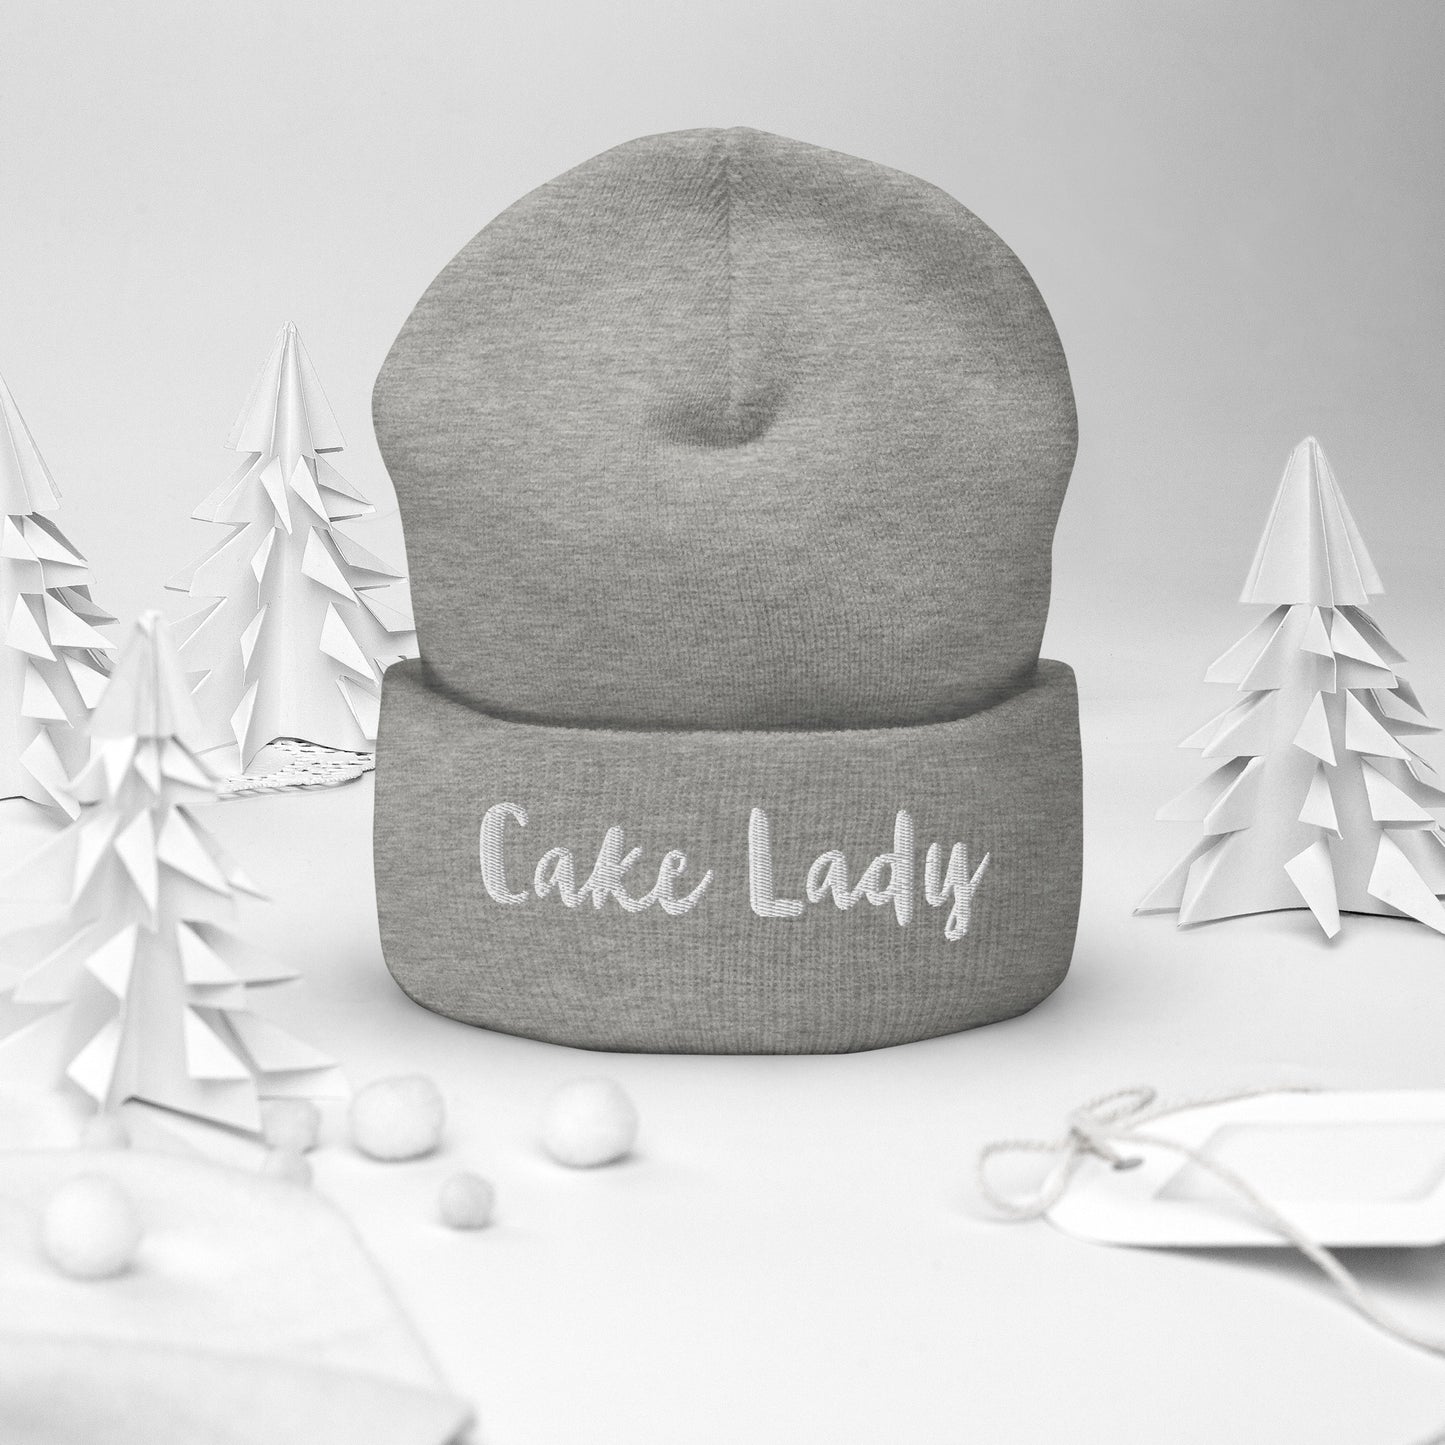 Cake Lady - Cuffed Beanie